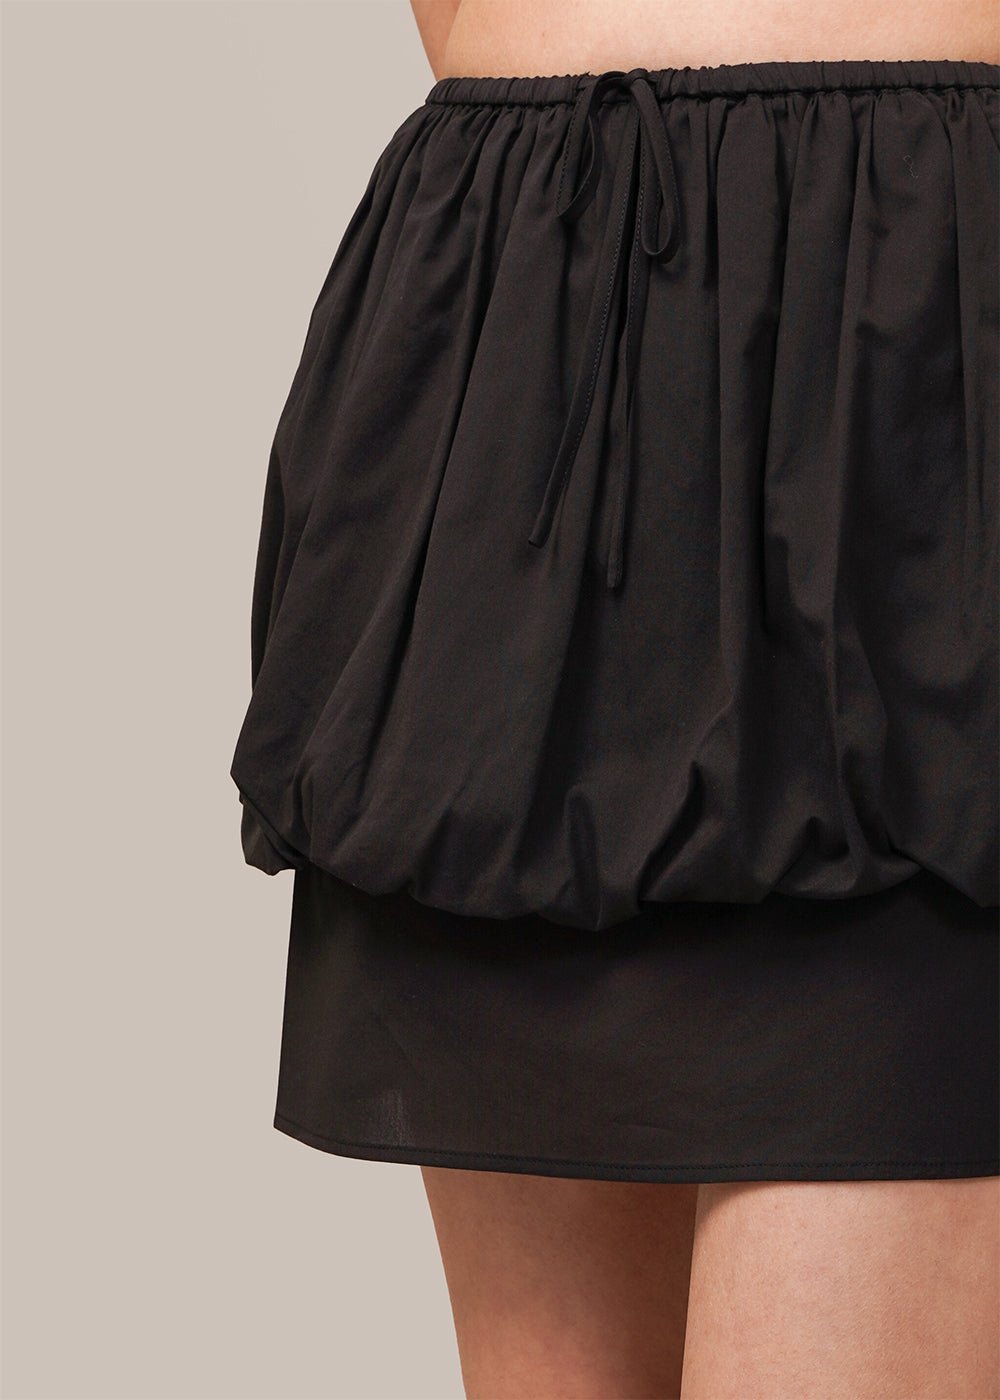 AMOMENTO Black Sheer Layered Skirt - New Classics Studios Sustainable Ethical Fashion Canada